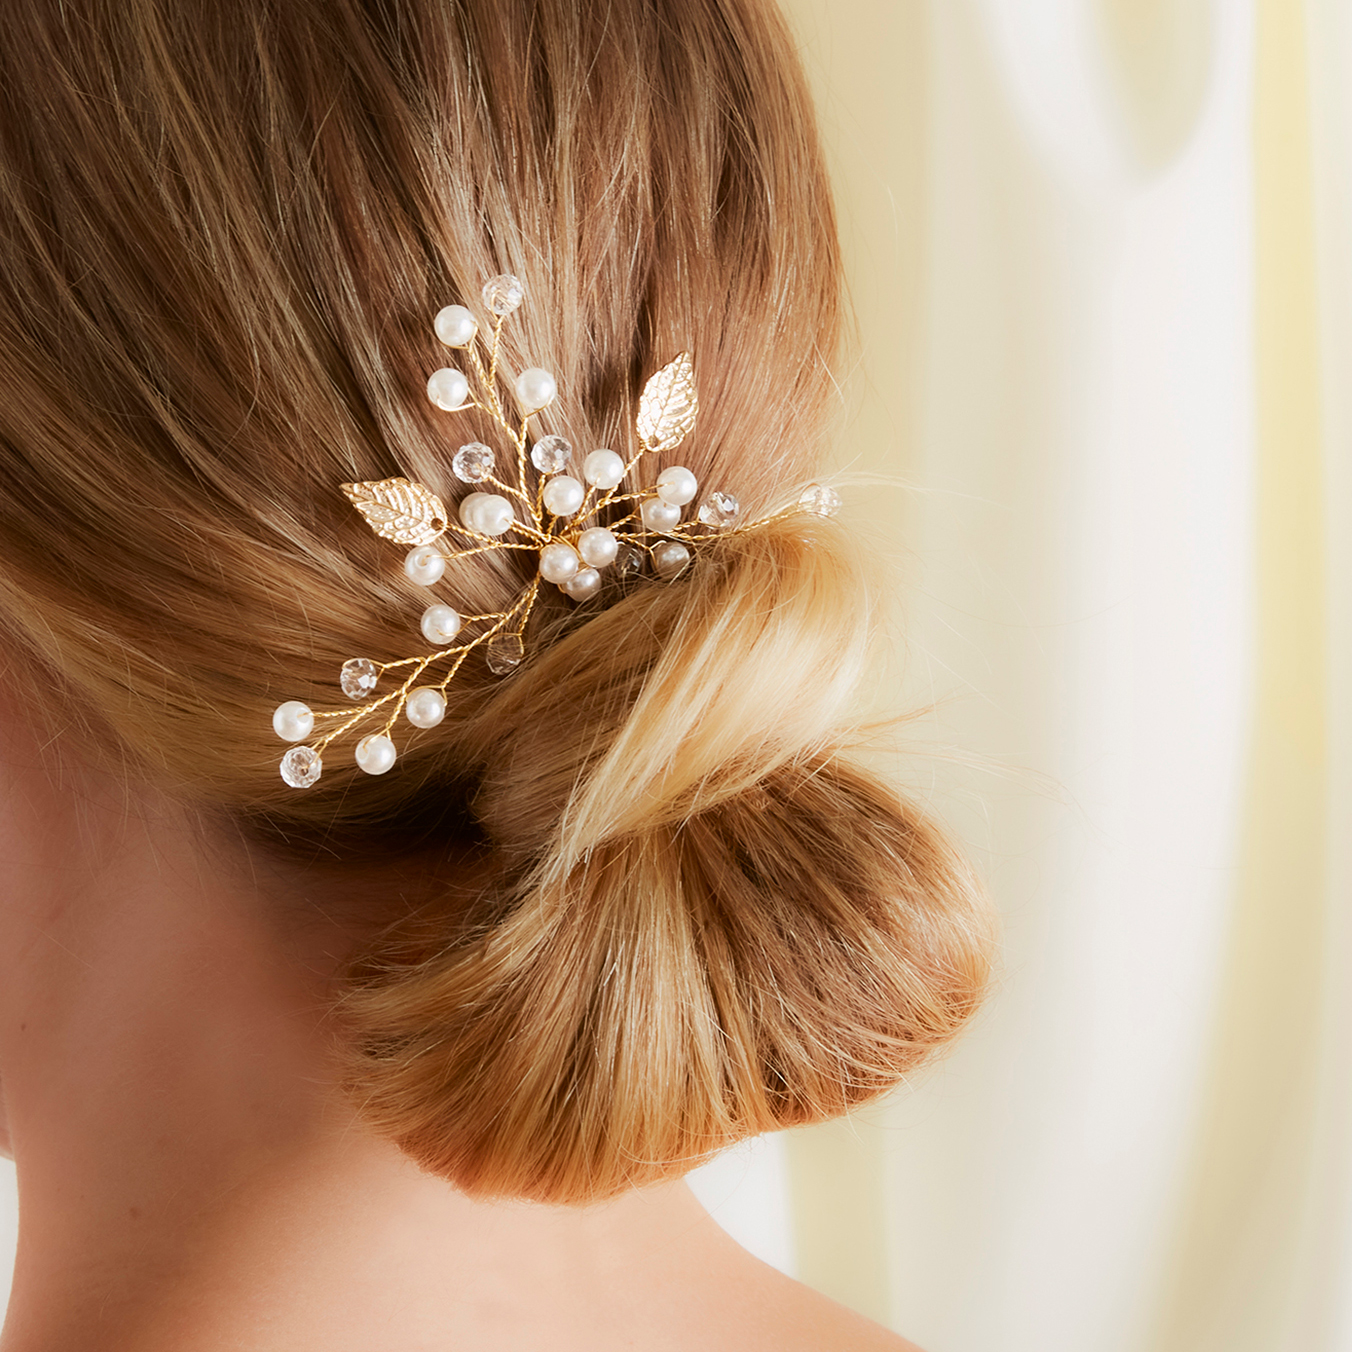 20 Bridal Hair Accessories That You'll Love - Zola Expert Wedding Advice